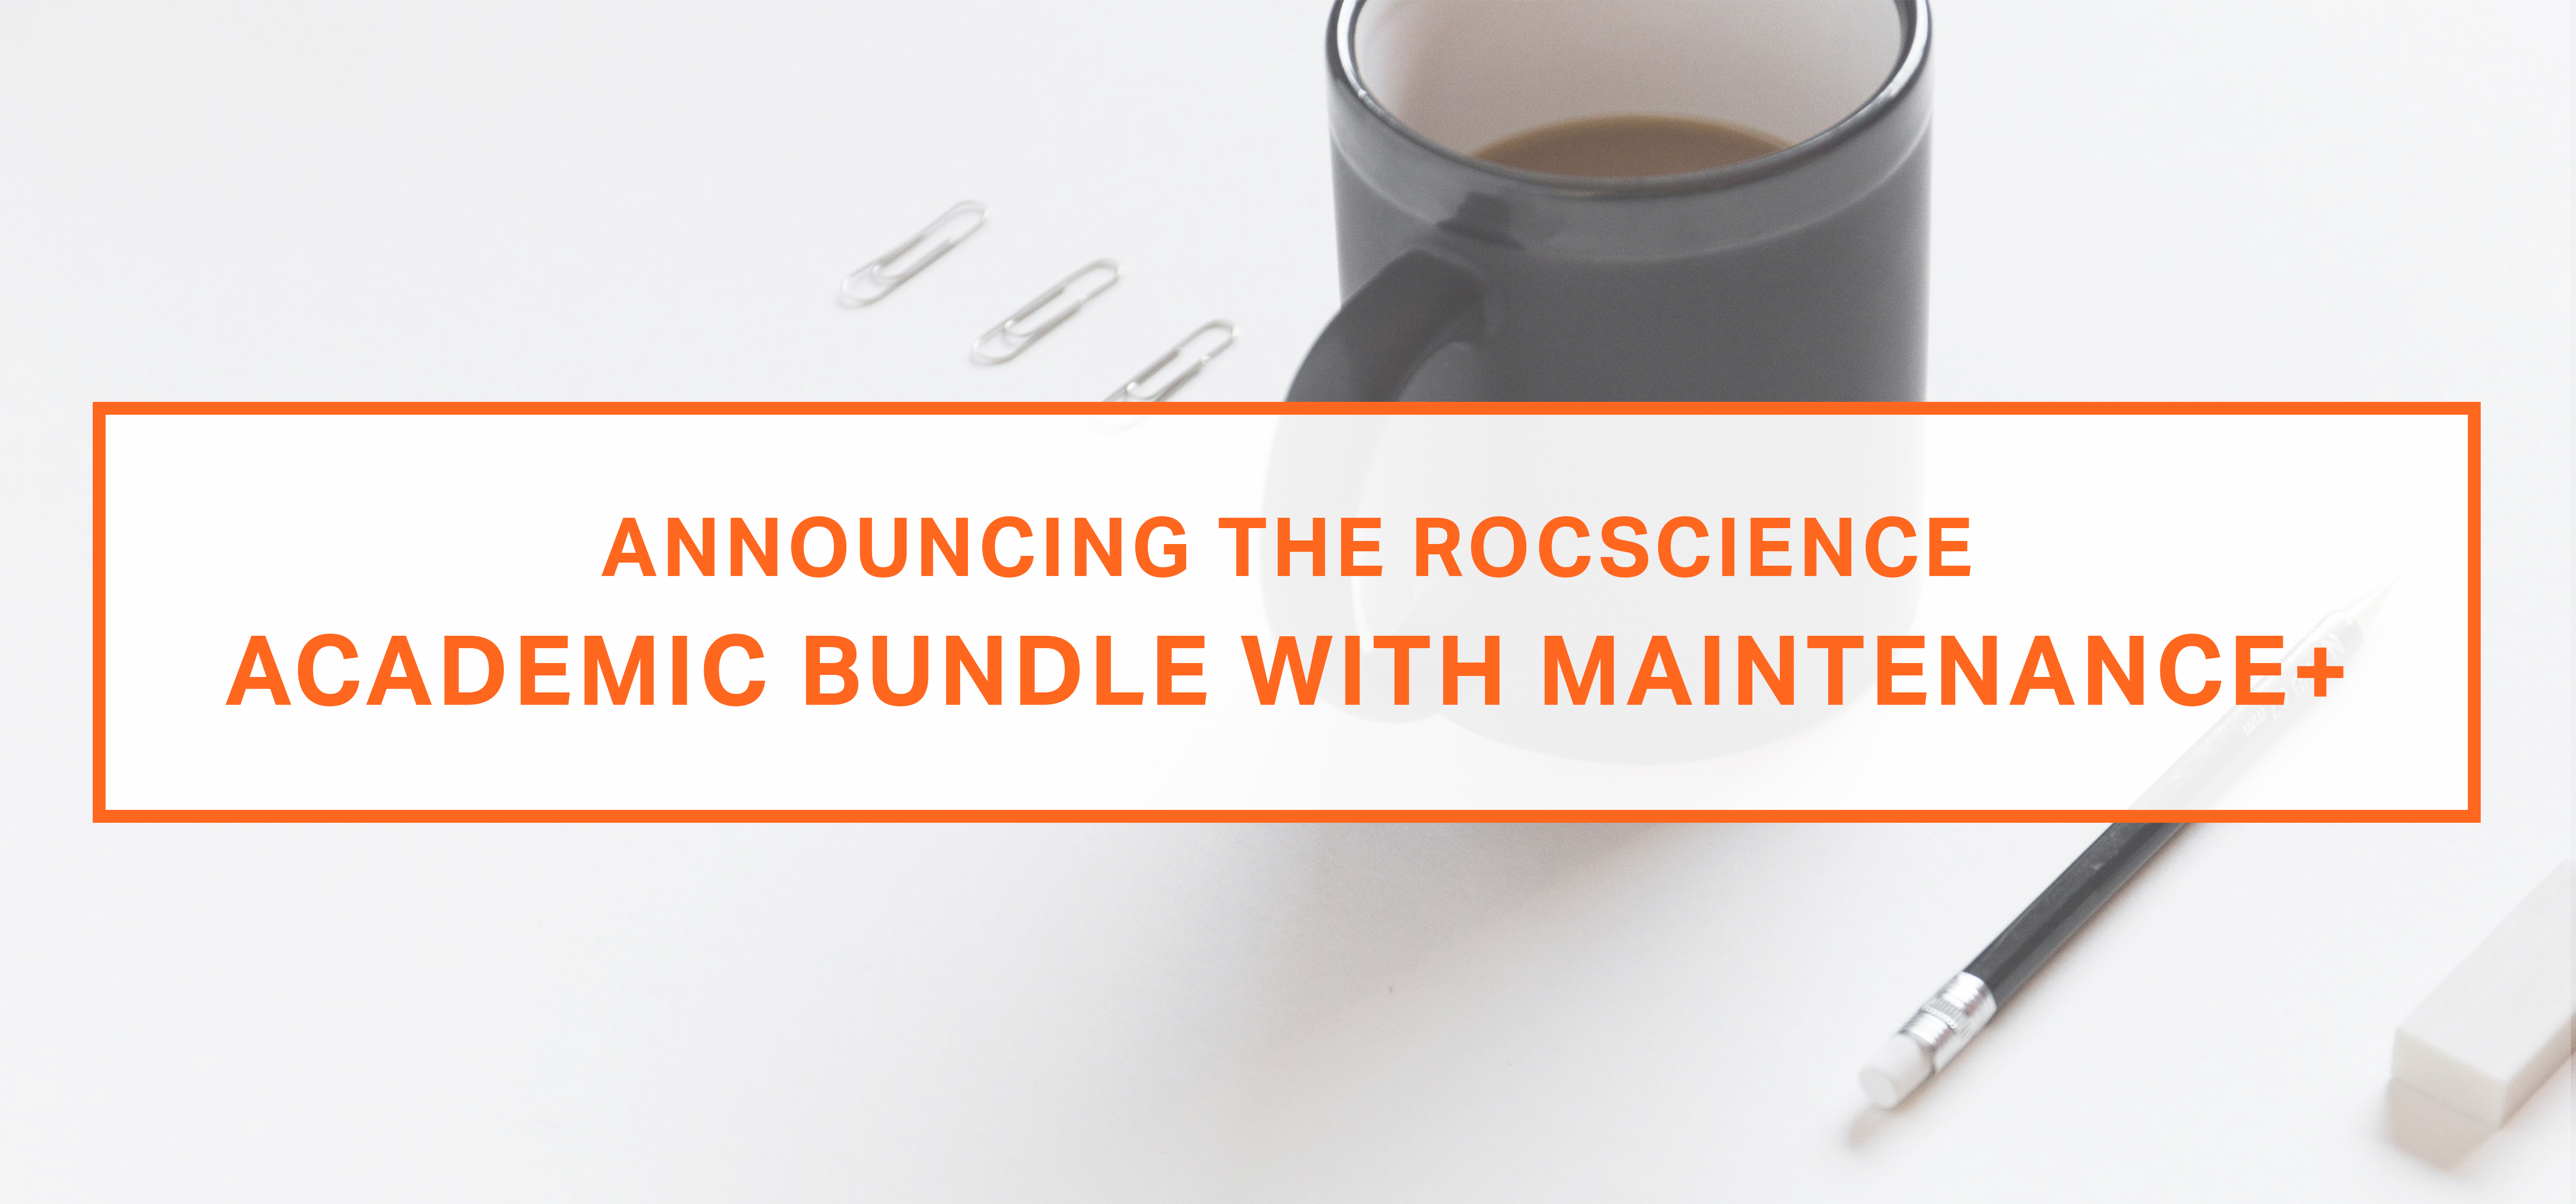 Announcing the Rocscience Academic Bundle With Maintenance+